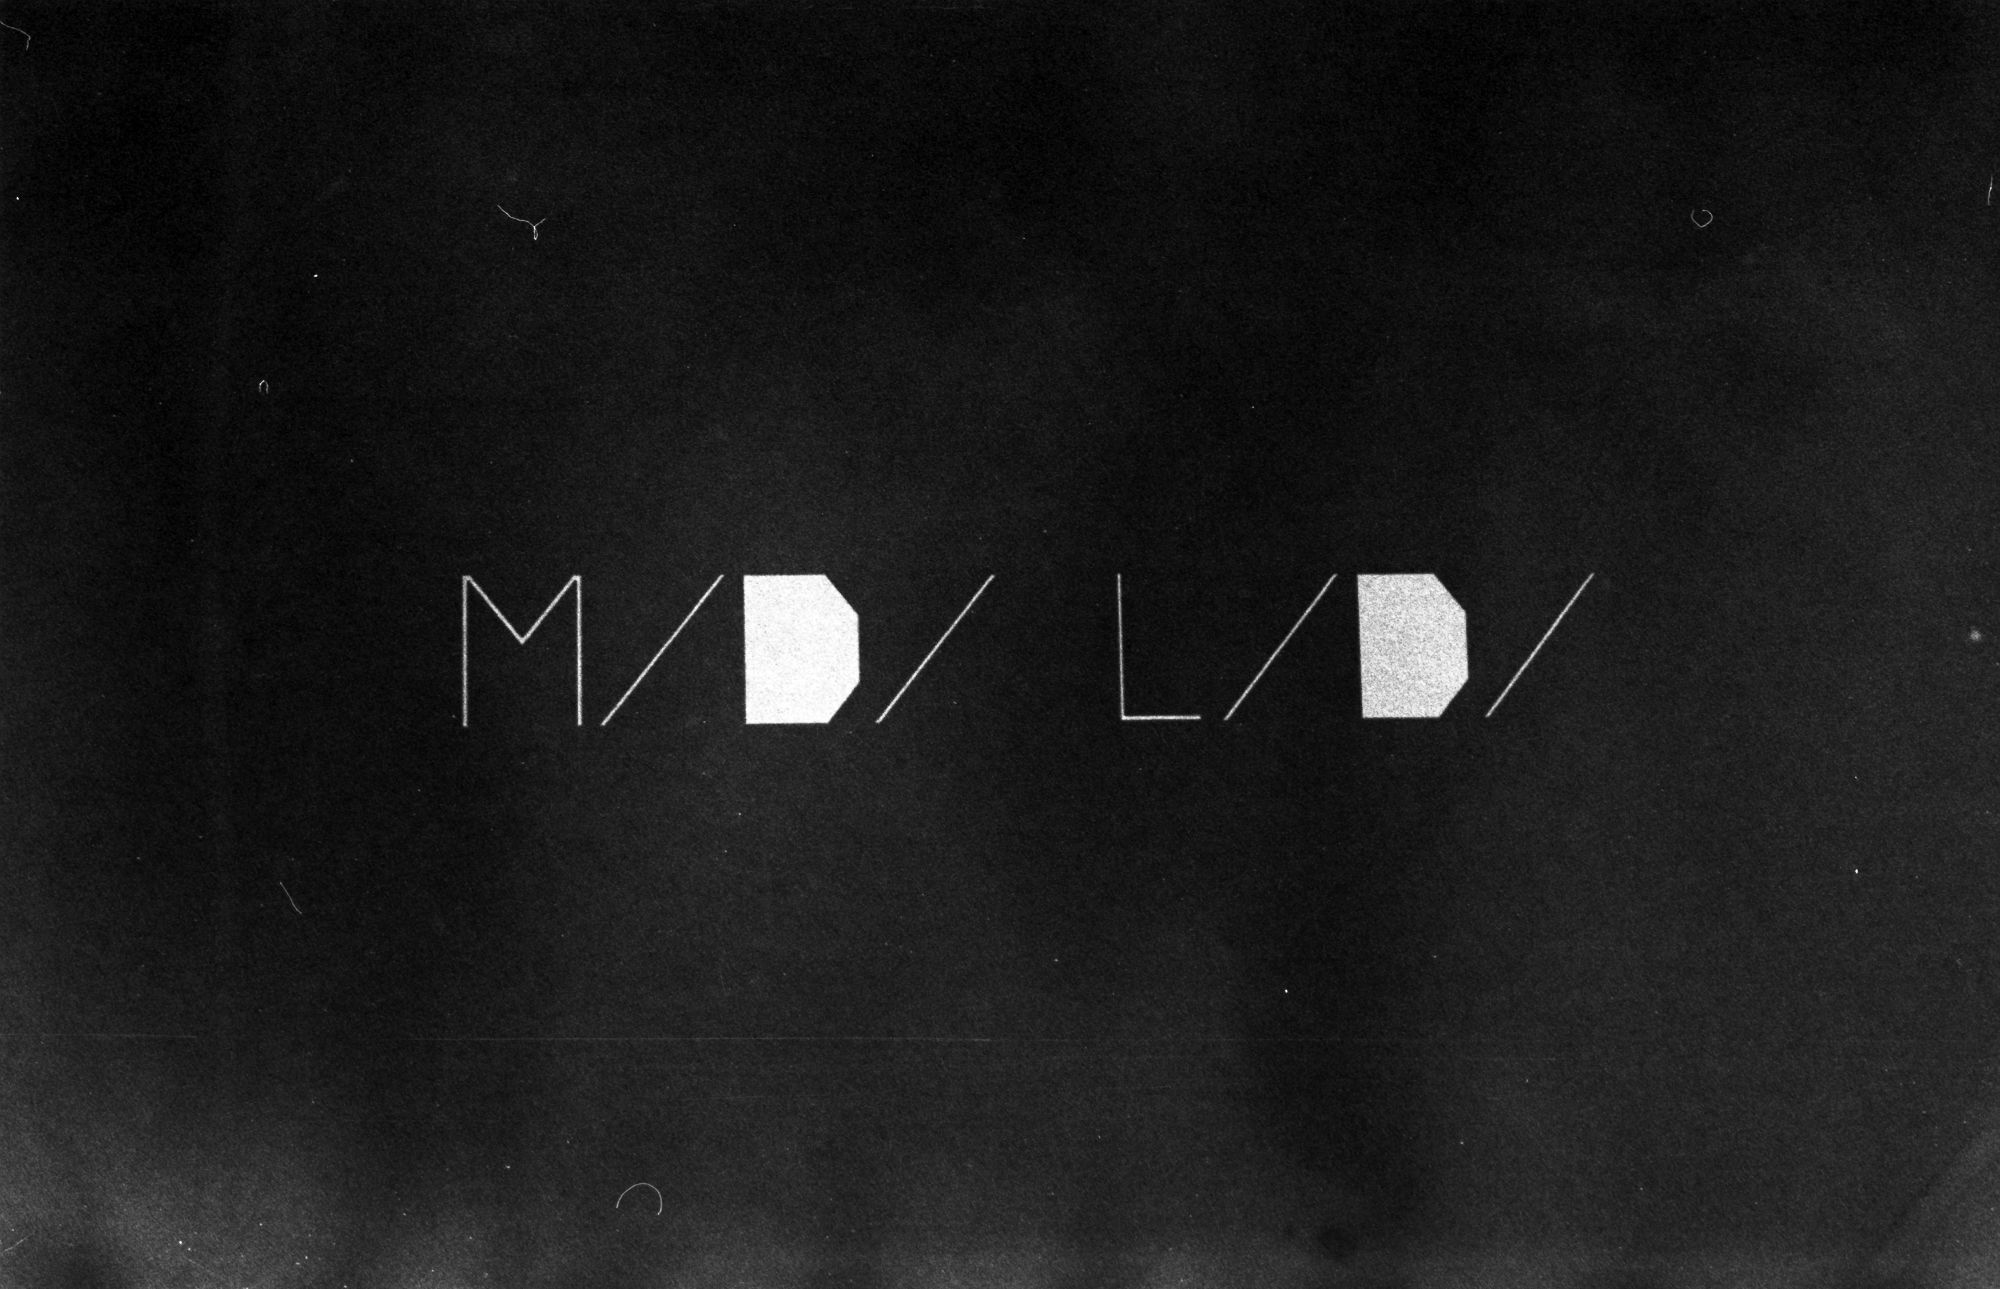 Black and white photo of Midi LIdi logo